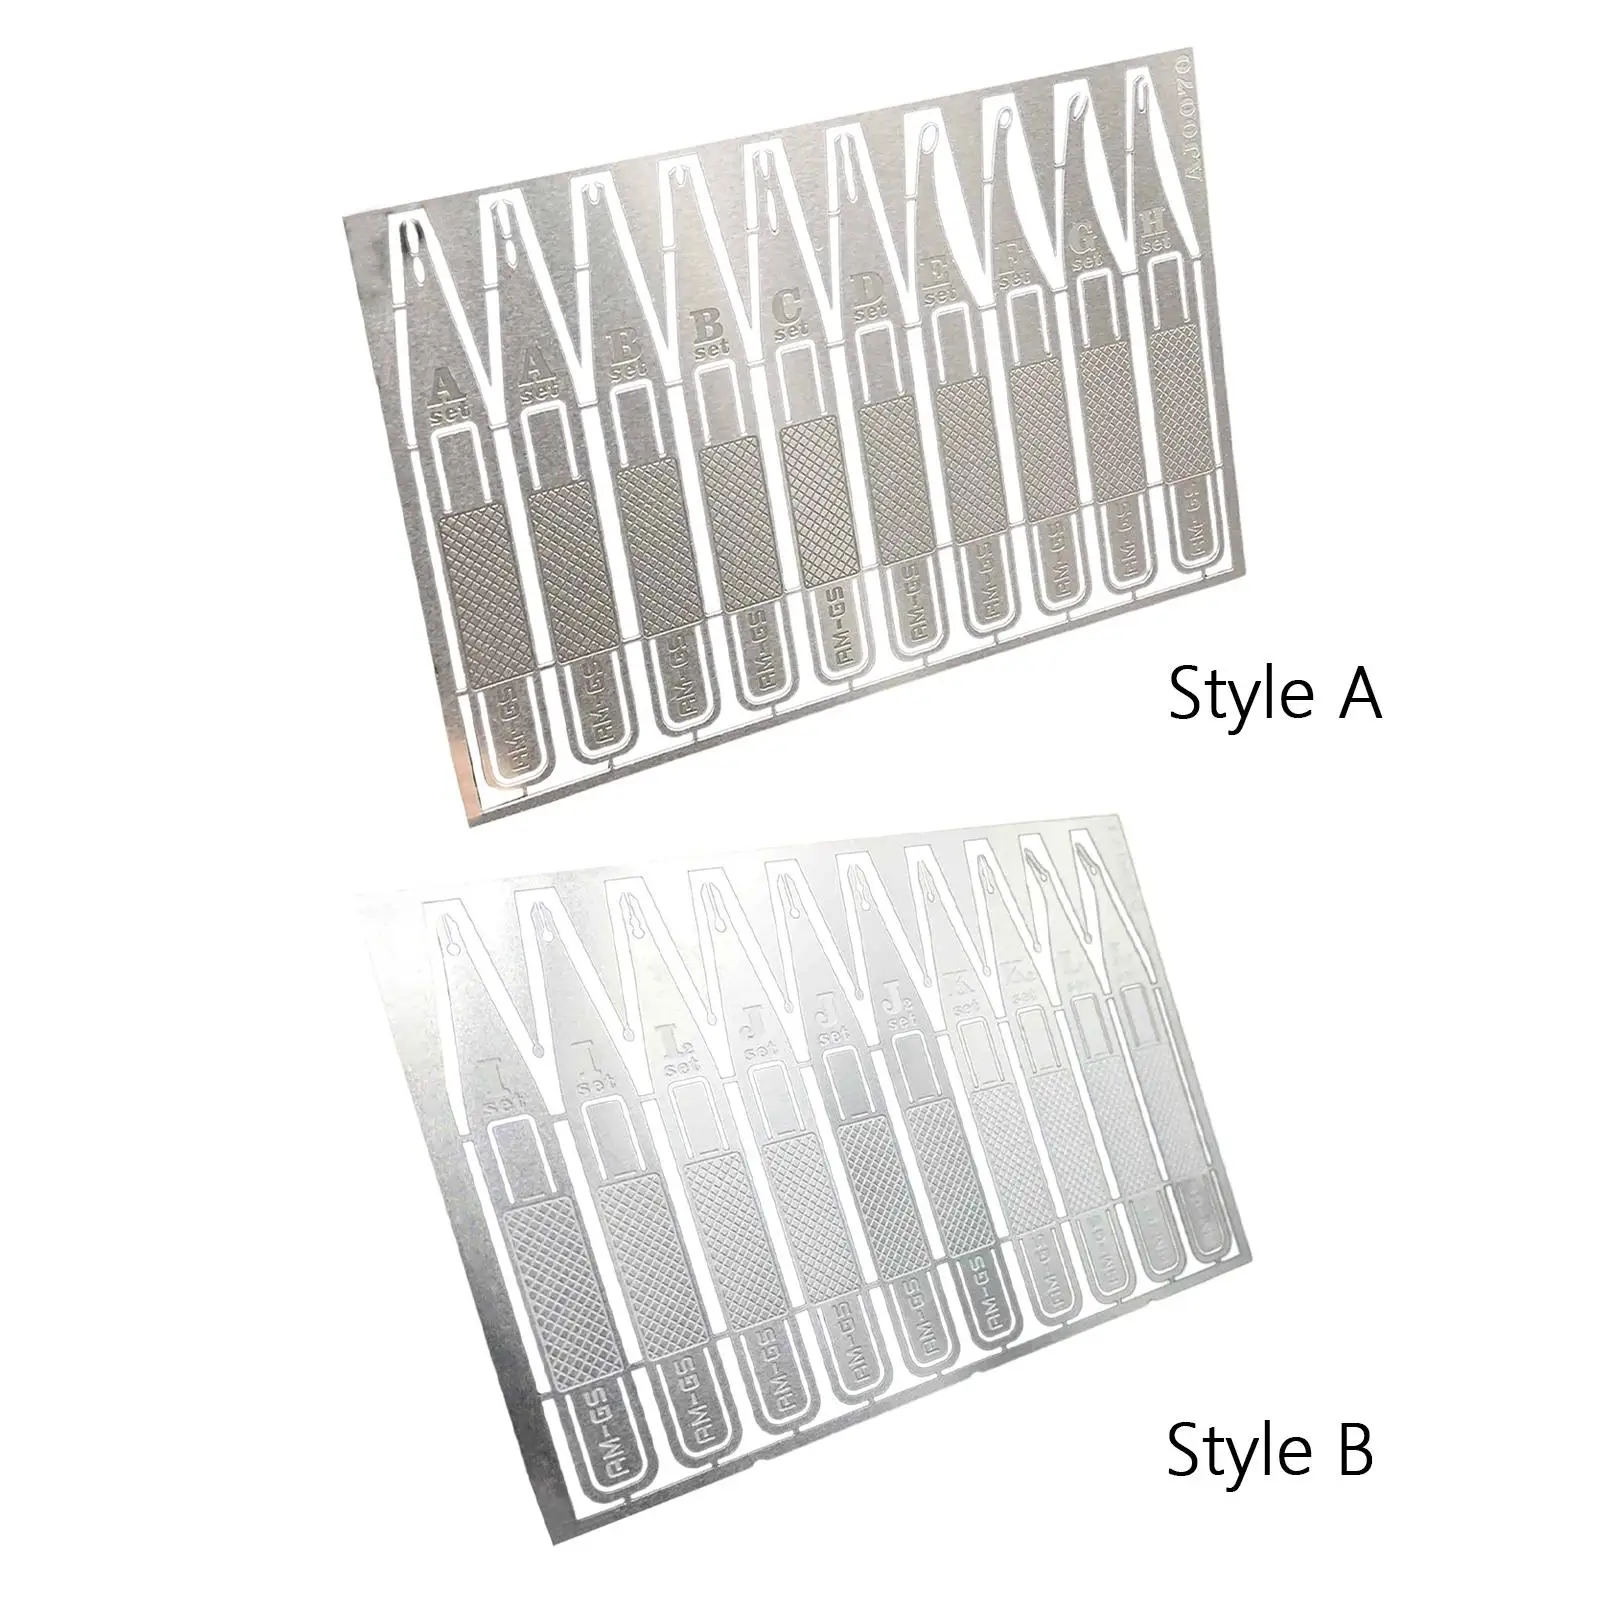 Precision Glue Micro Tips,Glue Marks Modeling Sticks,Precise Bonding Etching Sheet for Adhesive